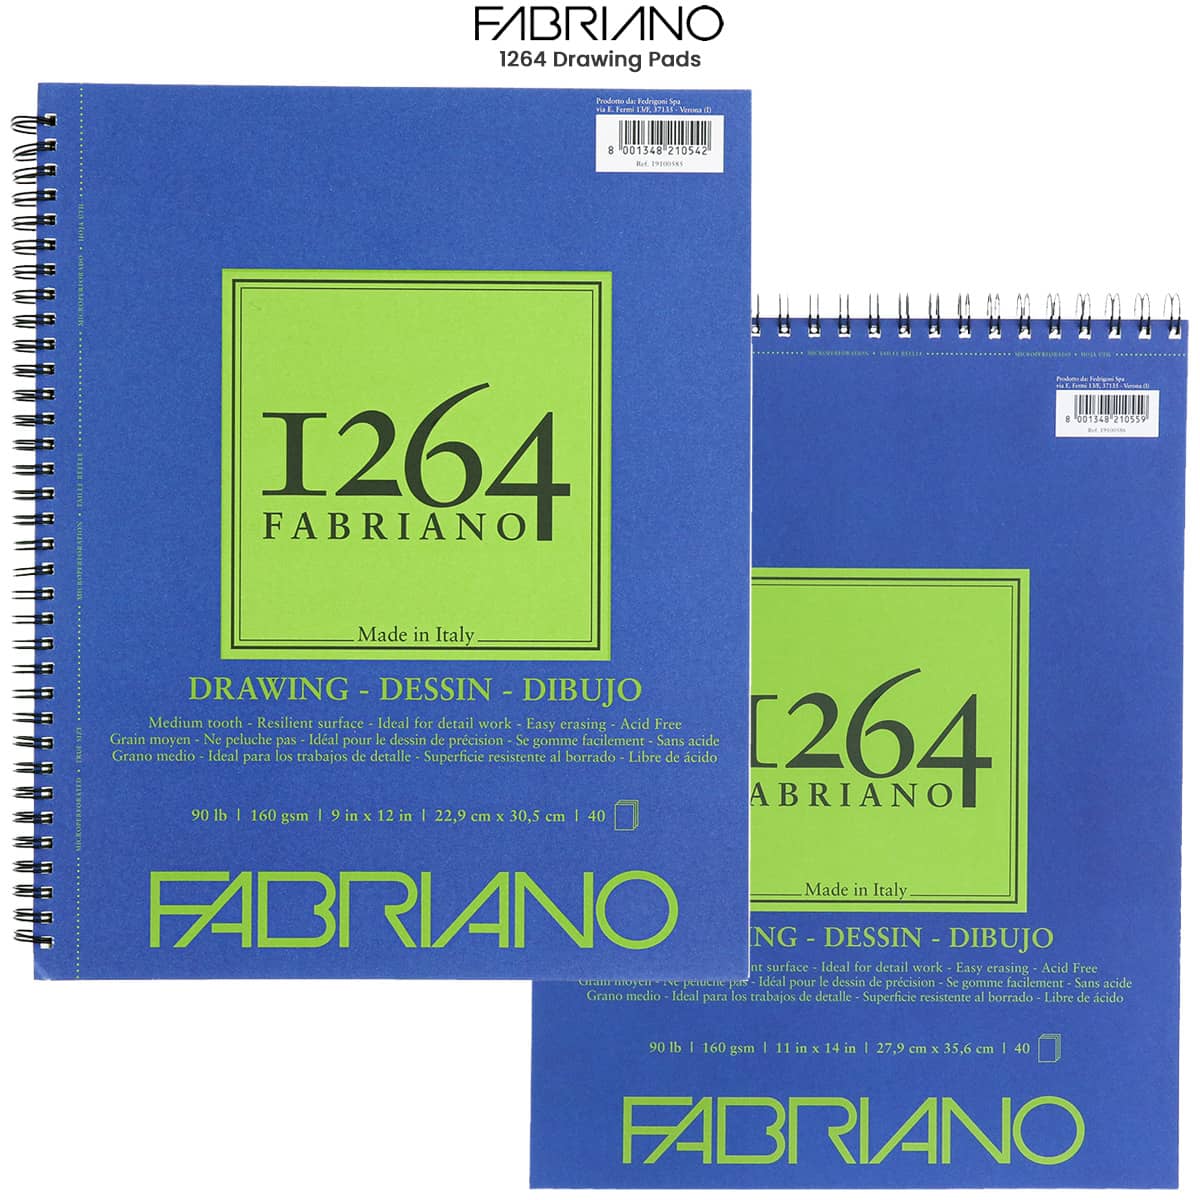 Fabriano 1264 Marker, smooth transparent paper for felt-tip pens